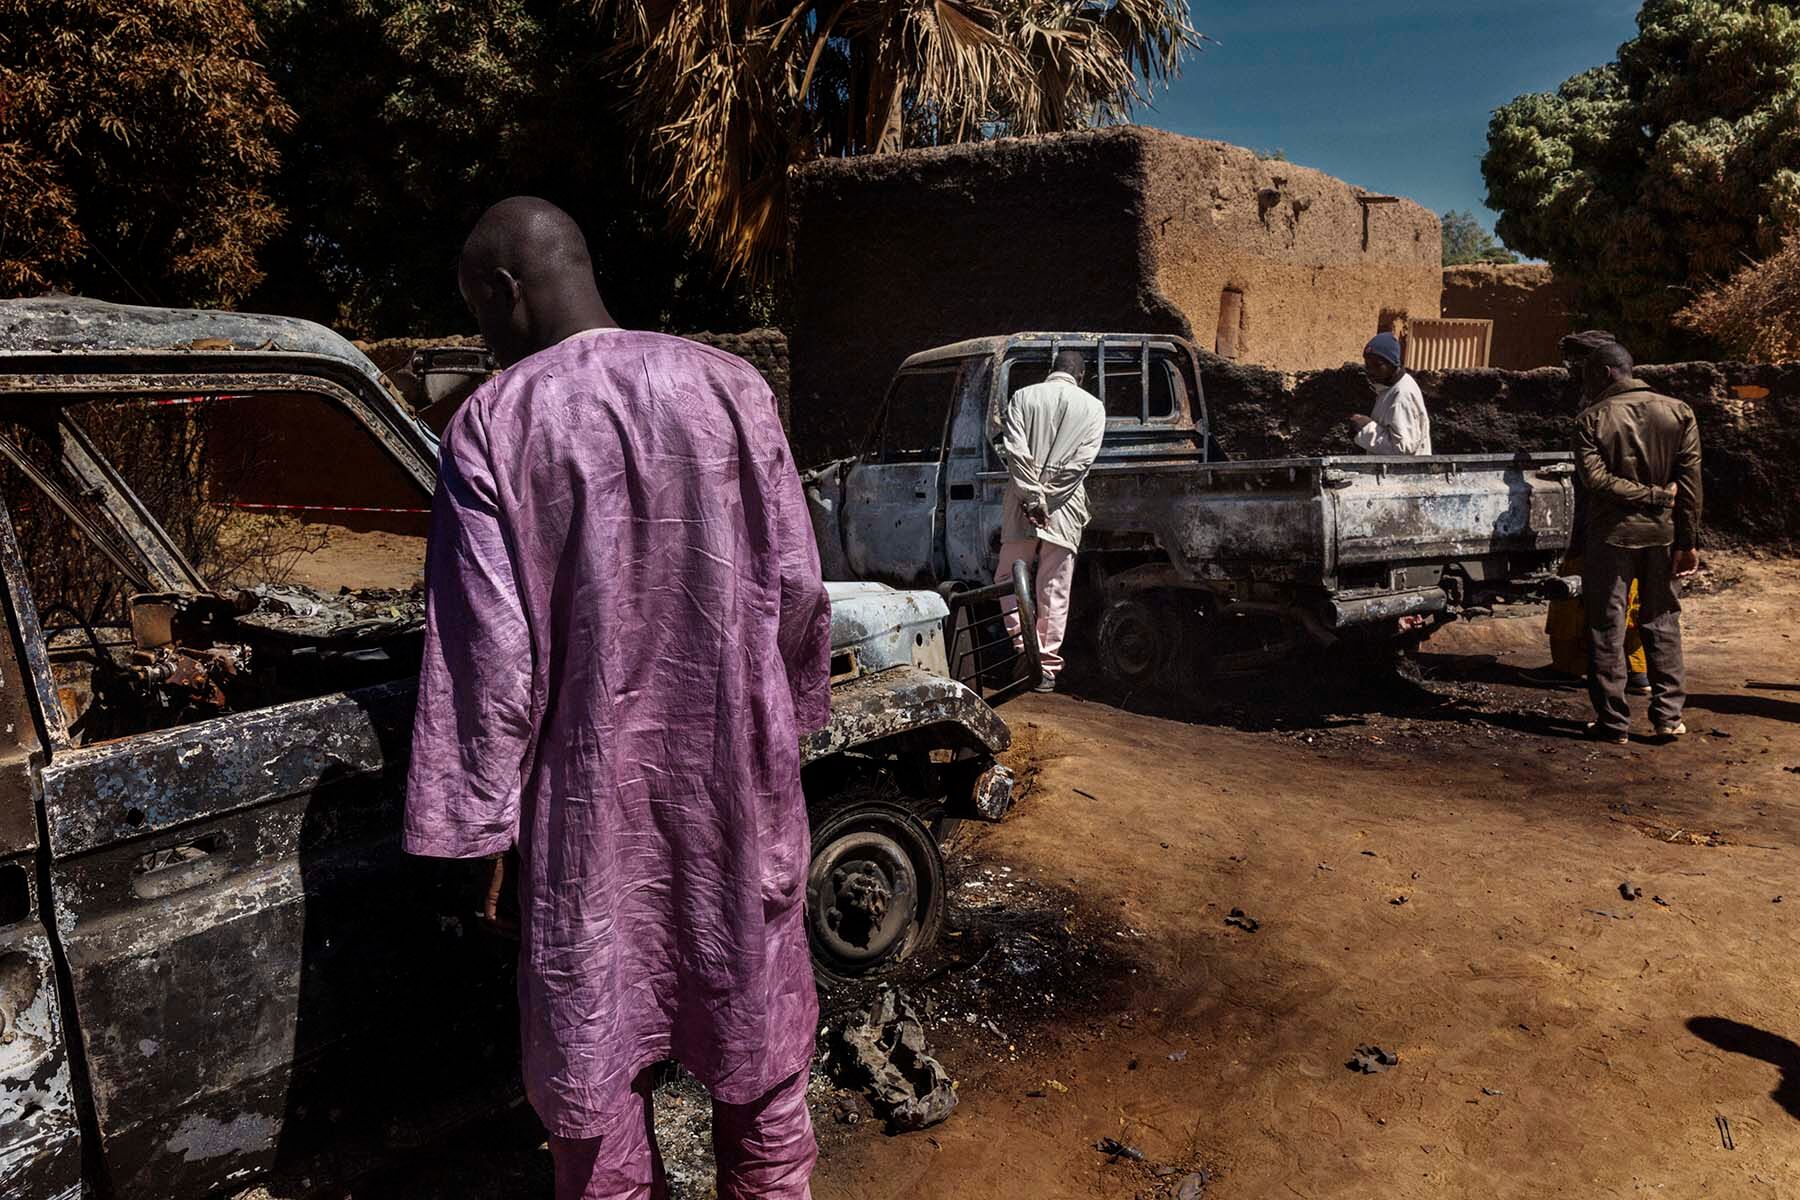 Mali, Diabaly, 2013